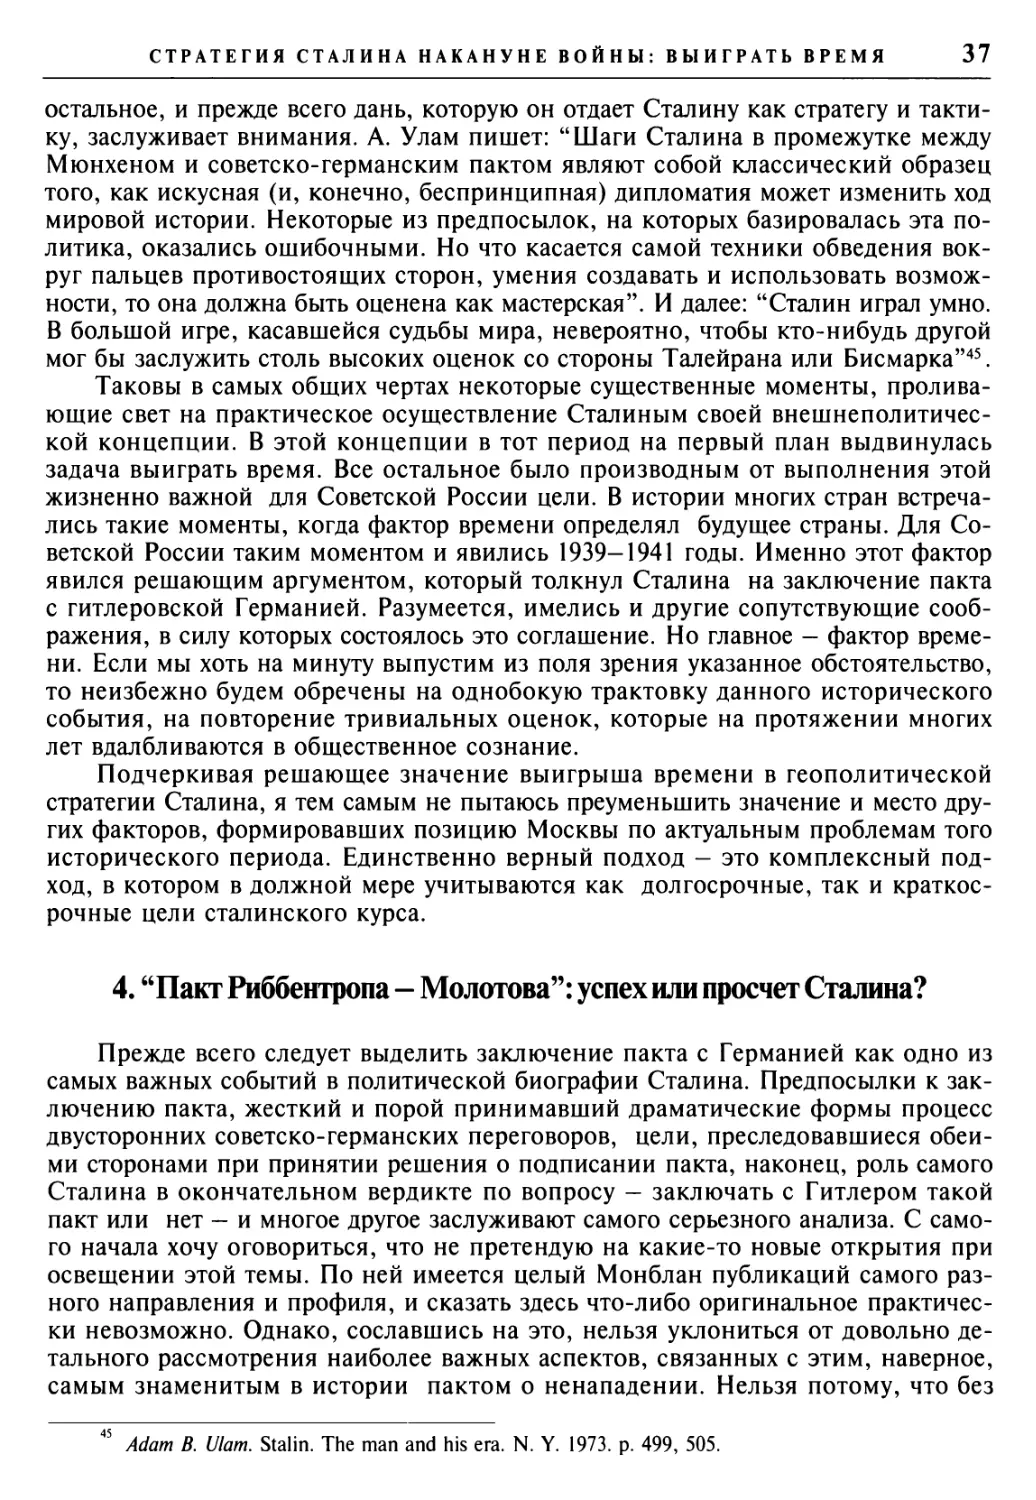 4. “Пакт Риббентропа — Молотова”: успех или просчет Сталина?